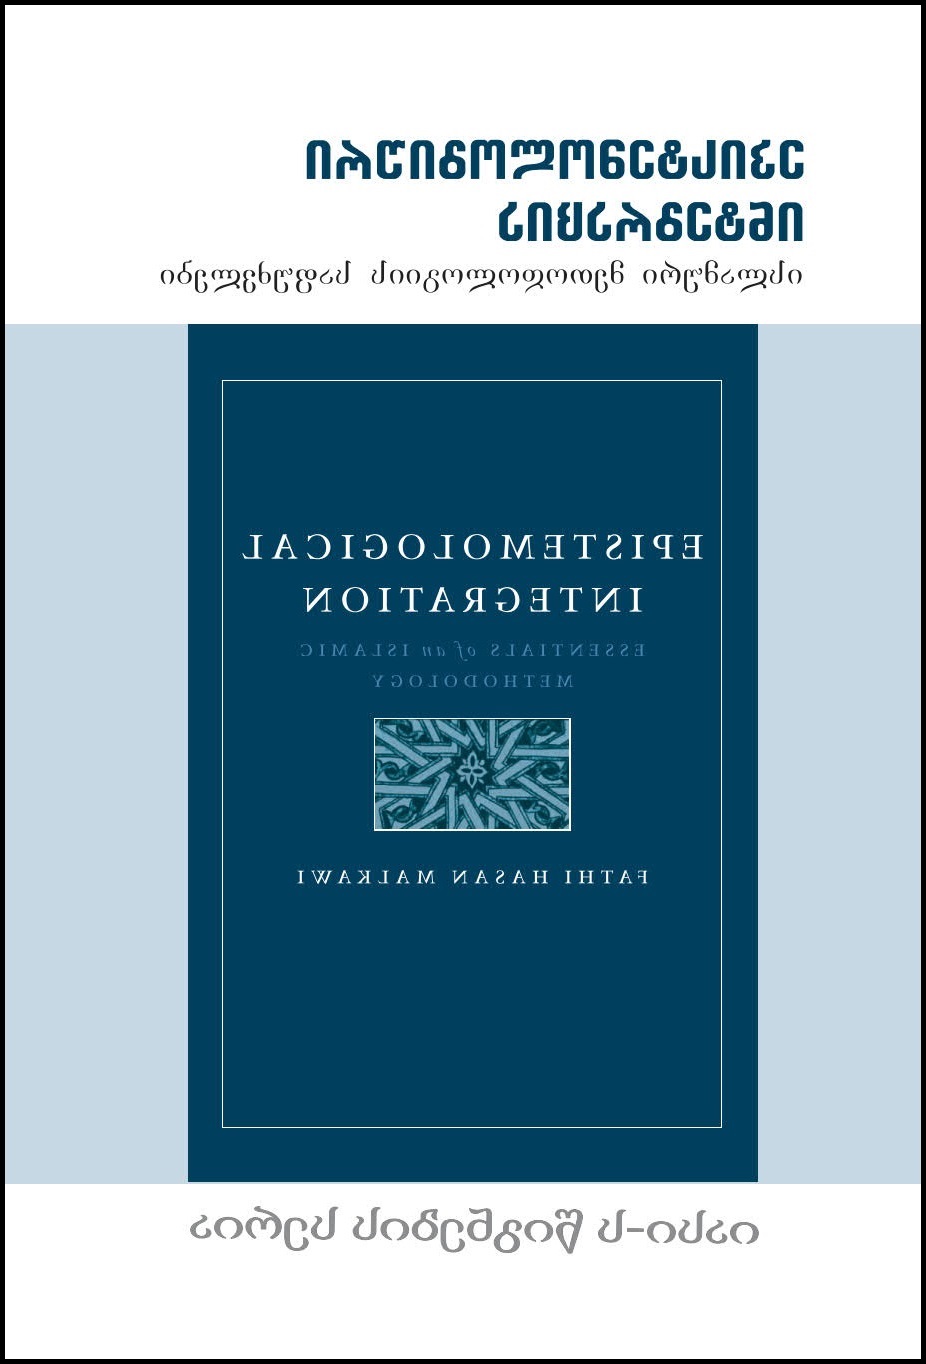 Georgian: epistemologiuri integracia islamuri meTodologiis safuZvlebi (Book-in-Brief: Epistemological Integration: Essentials of an Islamic Methodology)